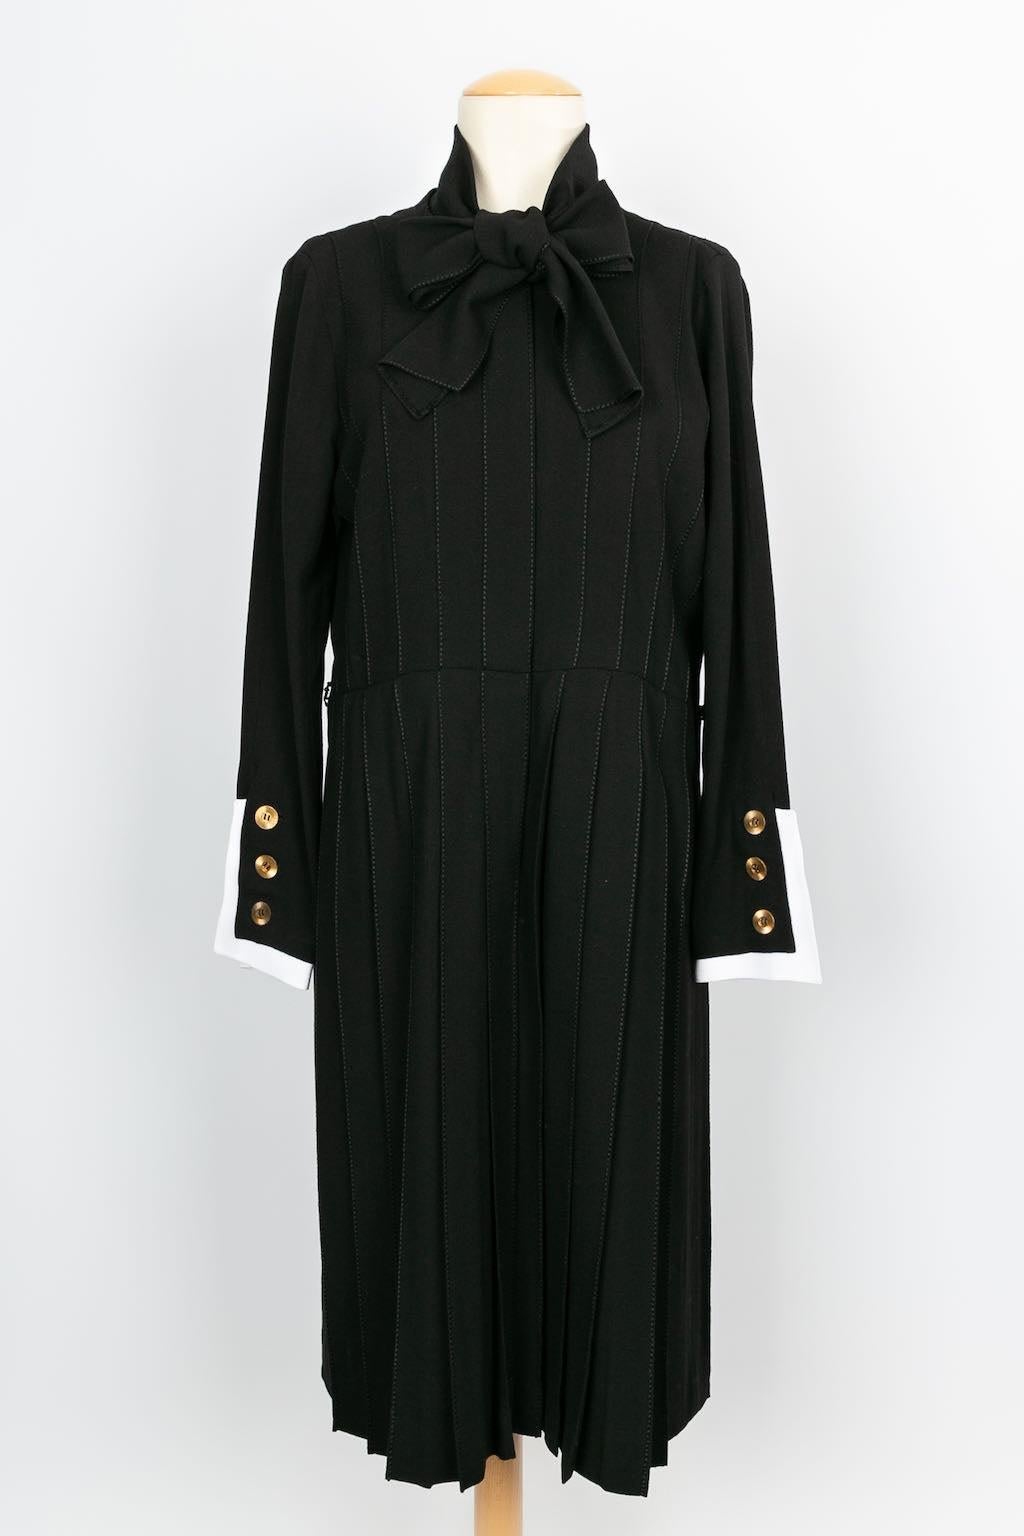 Women's Chanel Haute Couture Black Jersey Dress For Sale